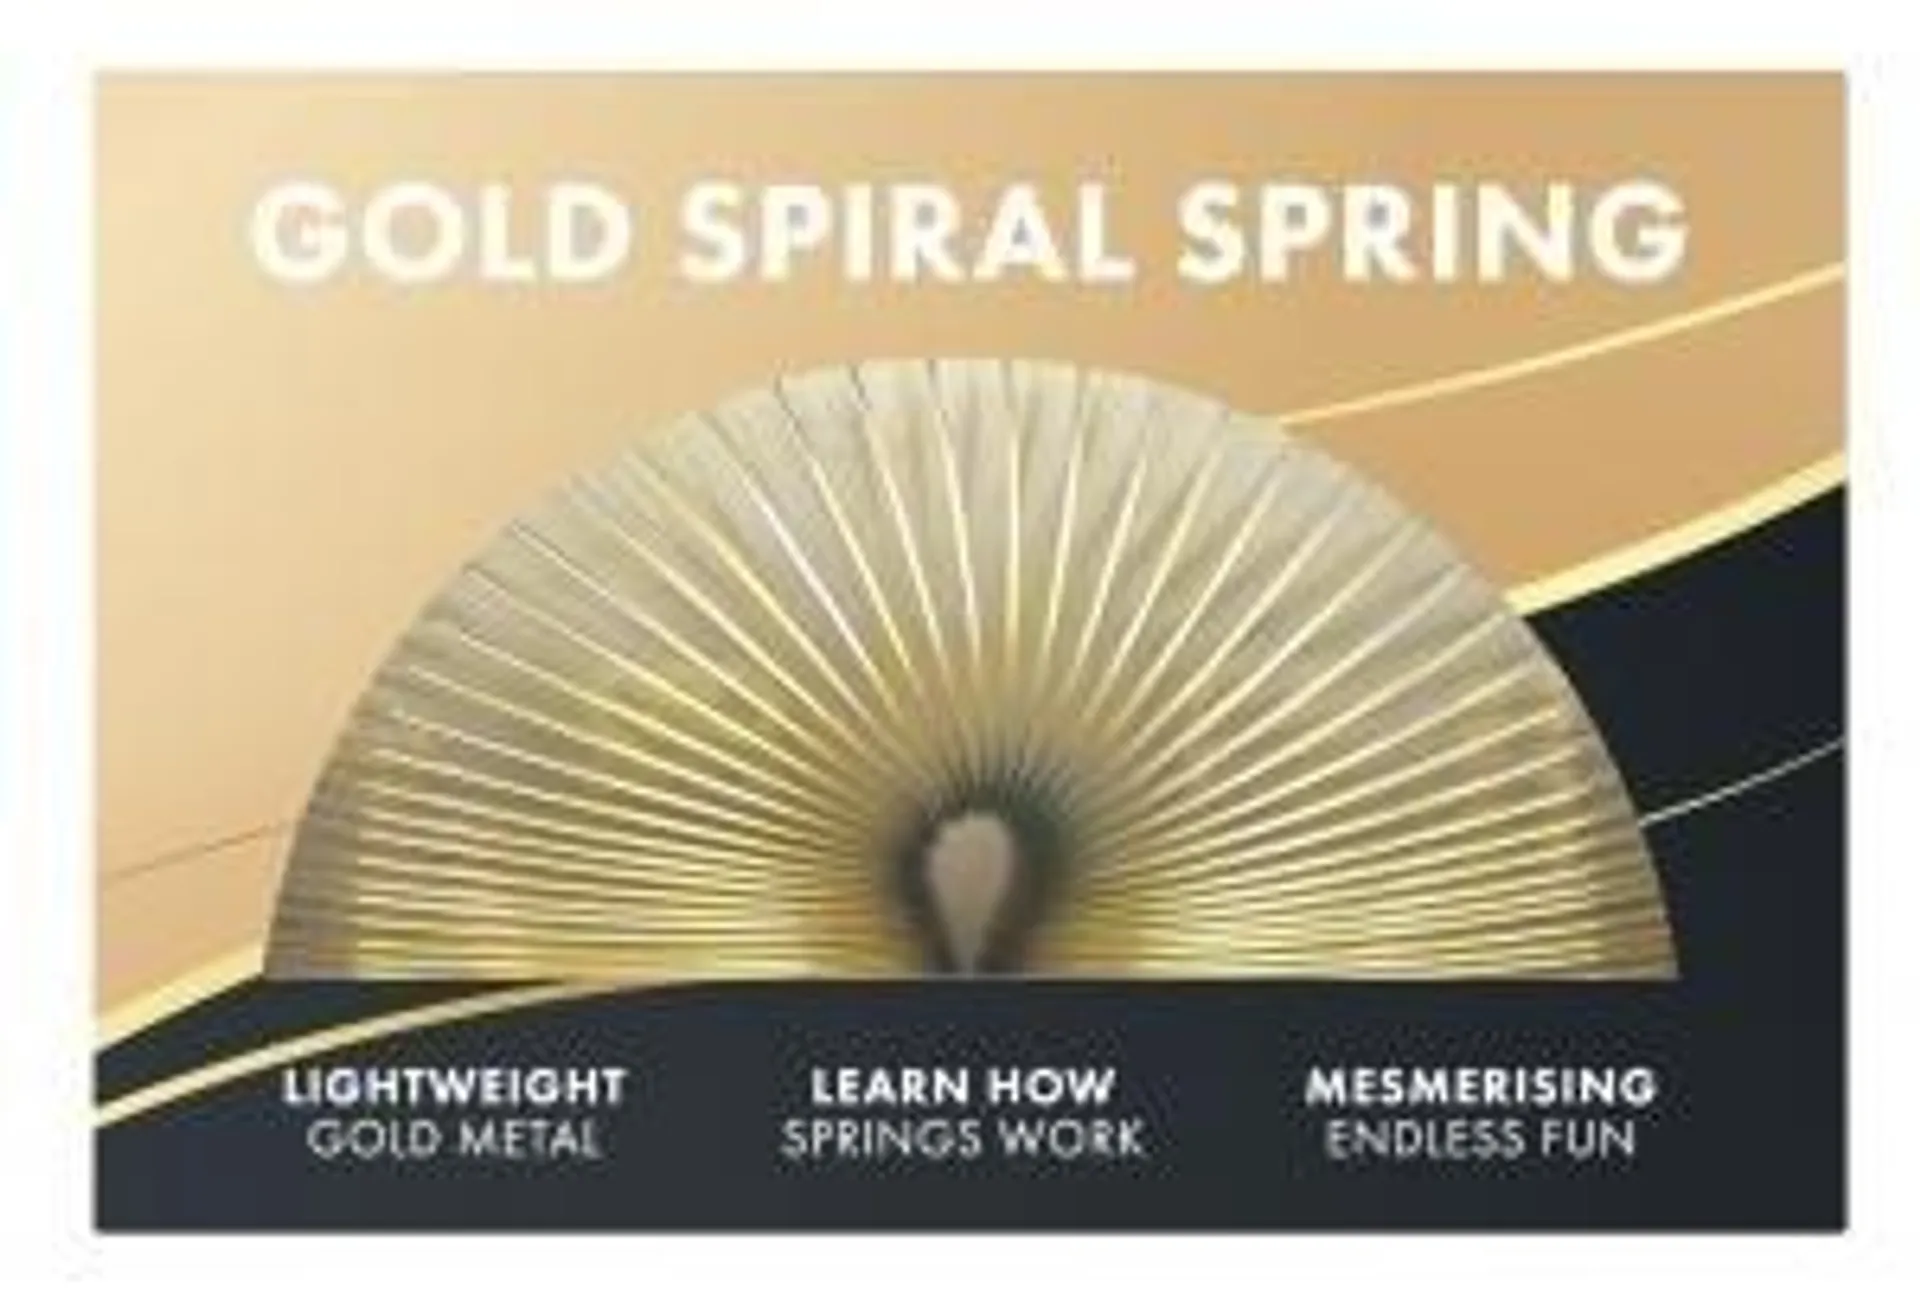 Gold Spiral Spring